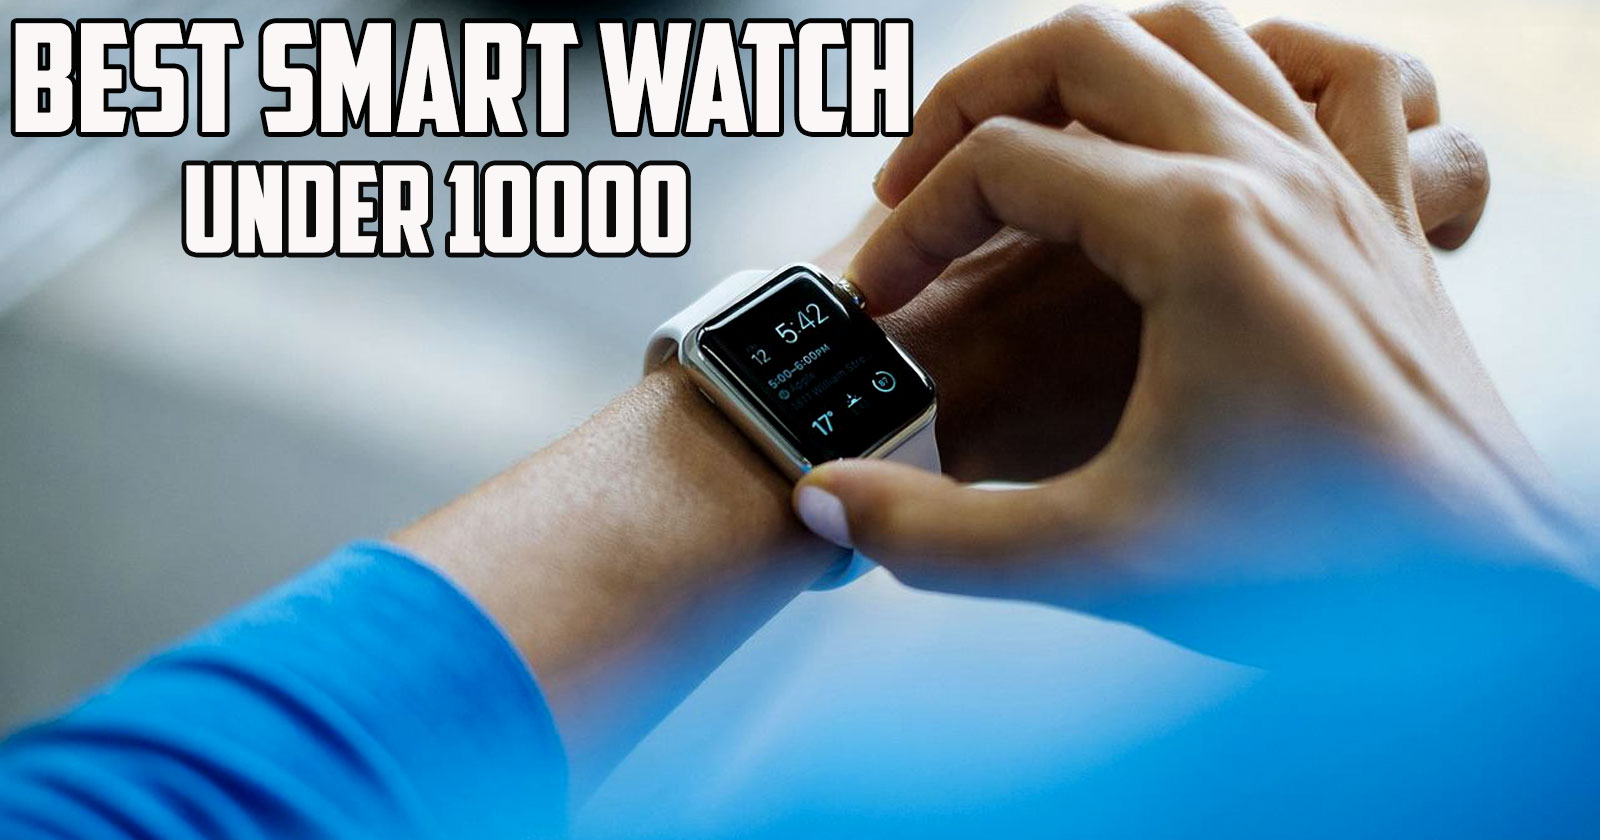 Top 10 Best Smart Watch Under 10000